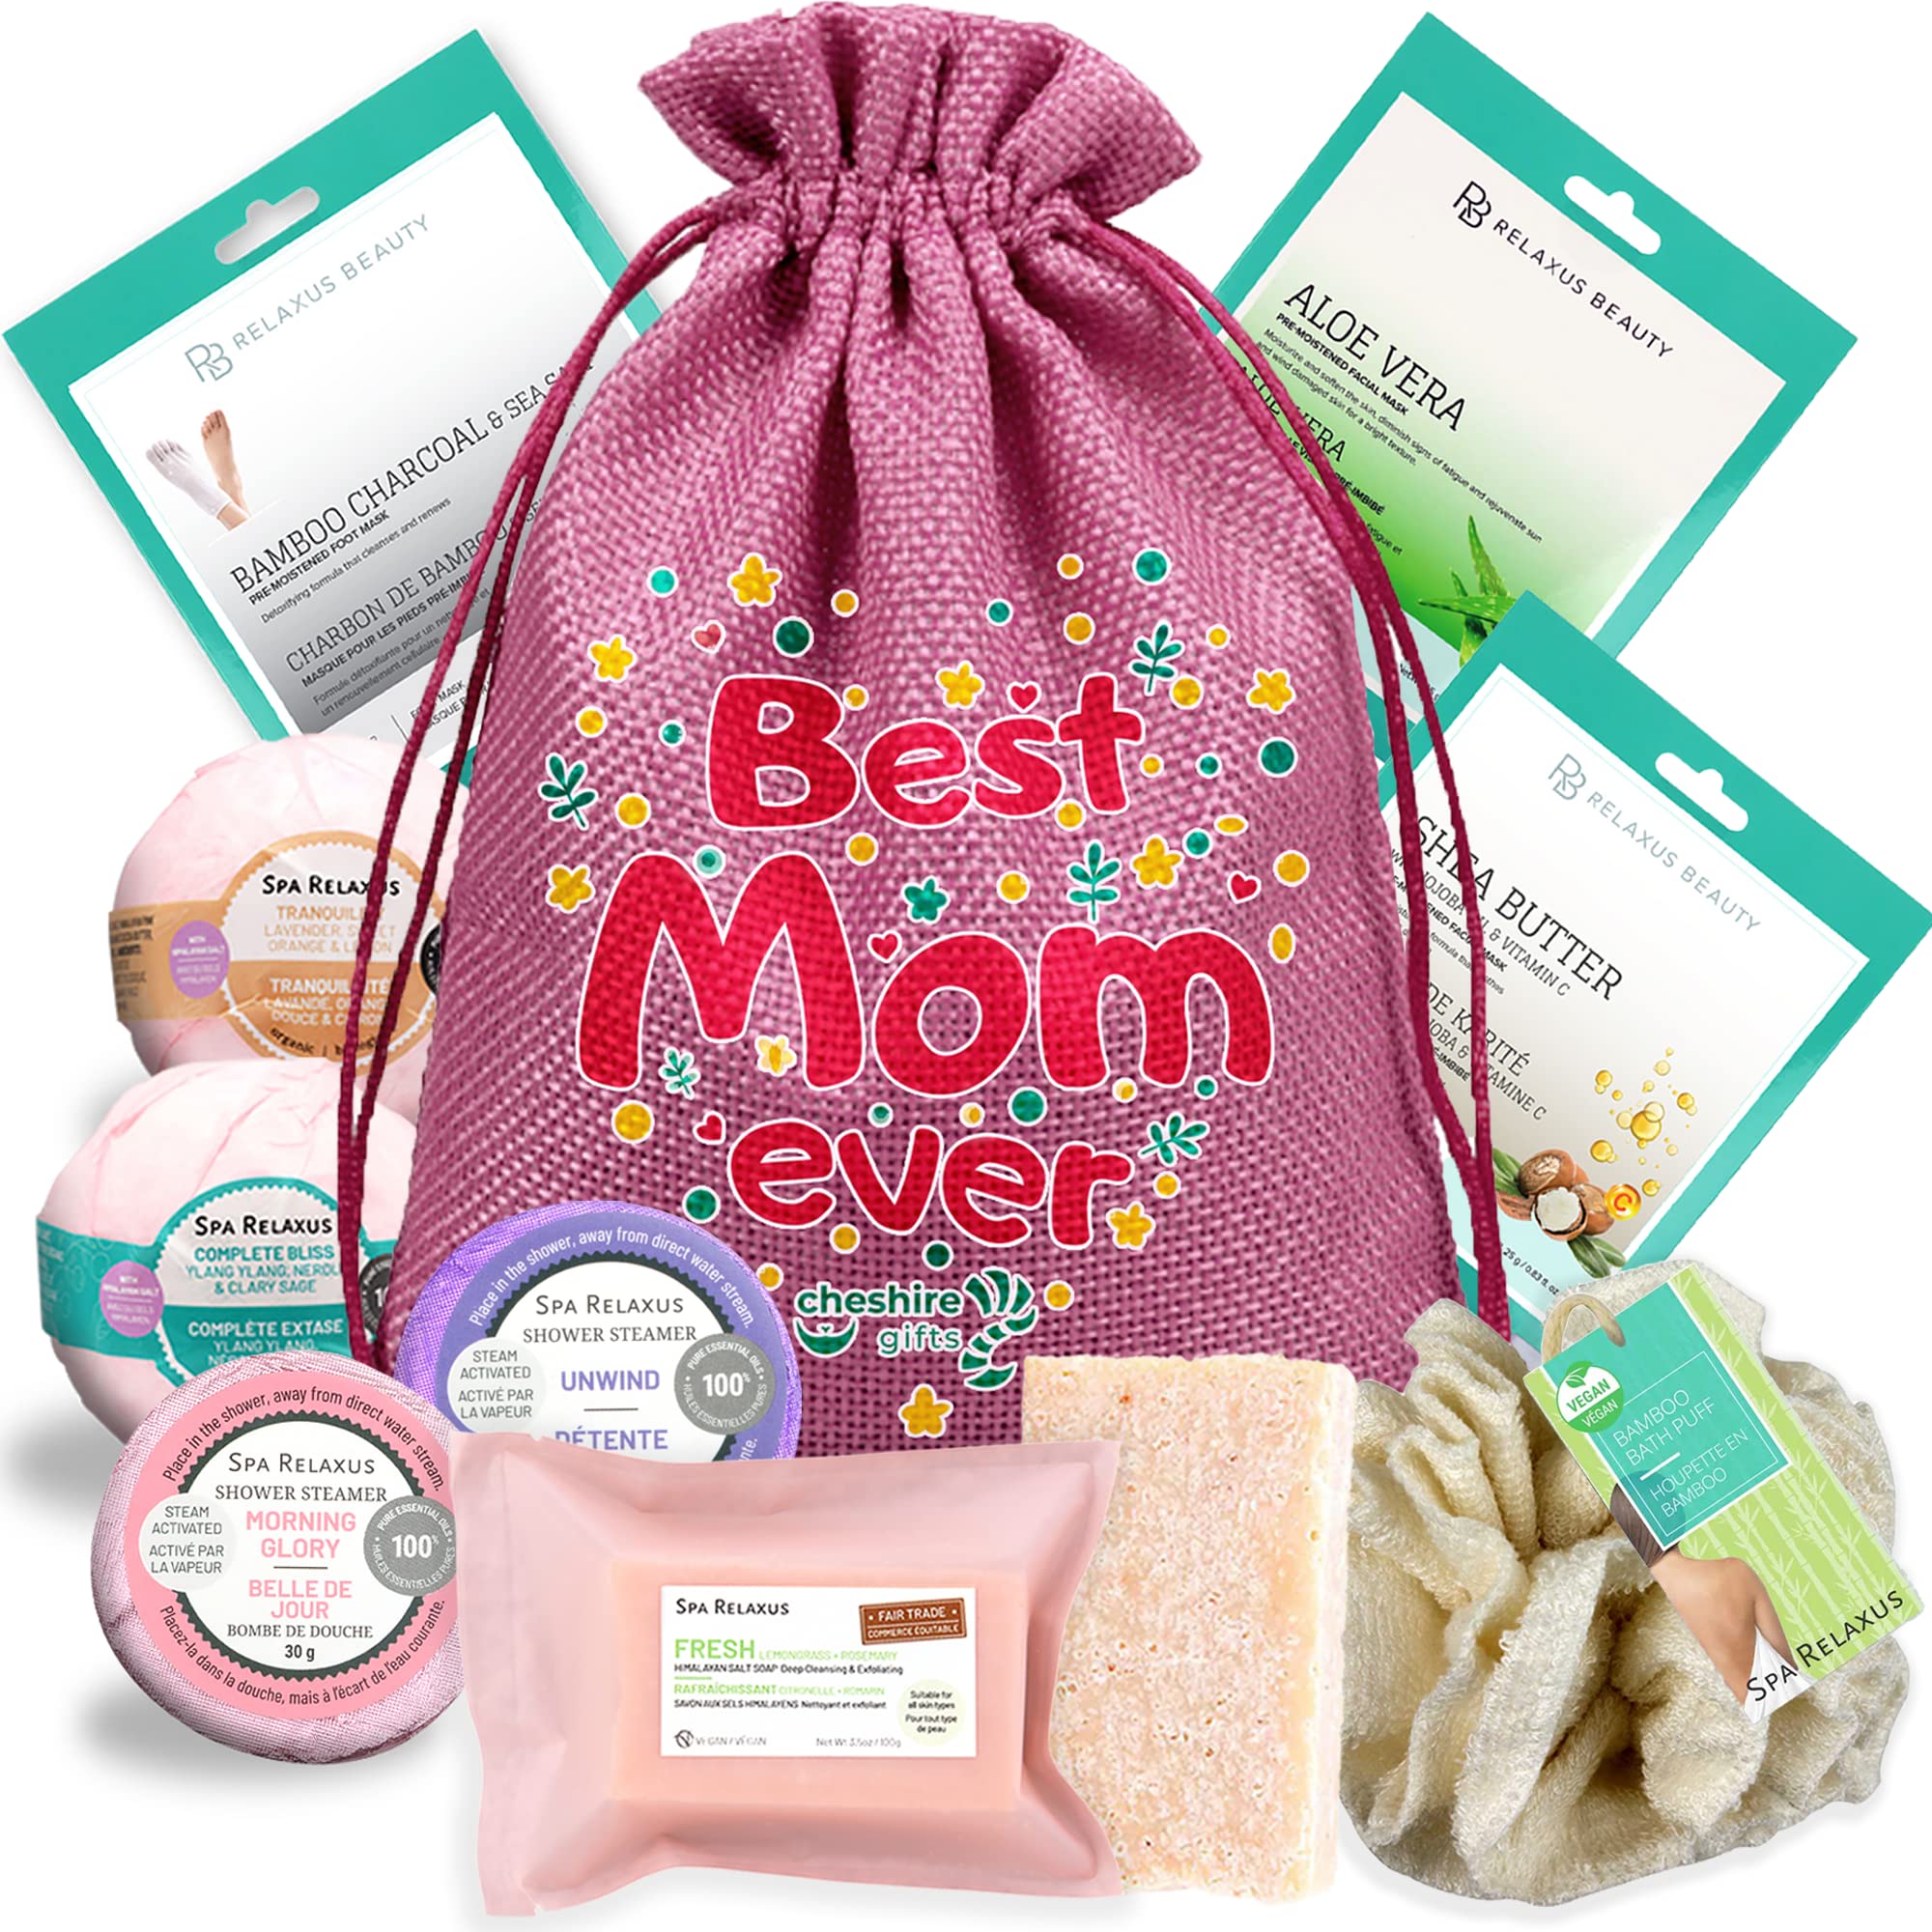  ELEMENU Gift Basket for Mom, Mothers Day Birthday